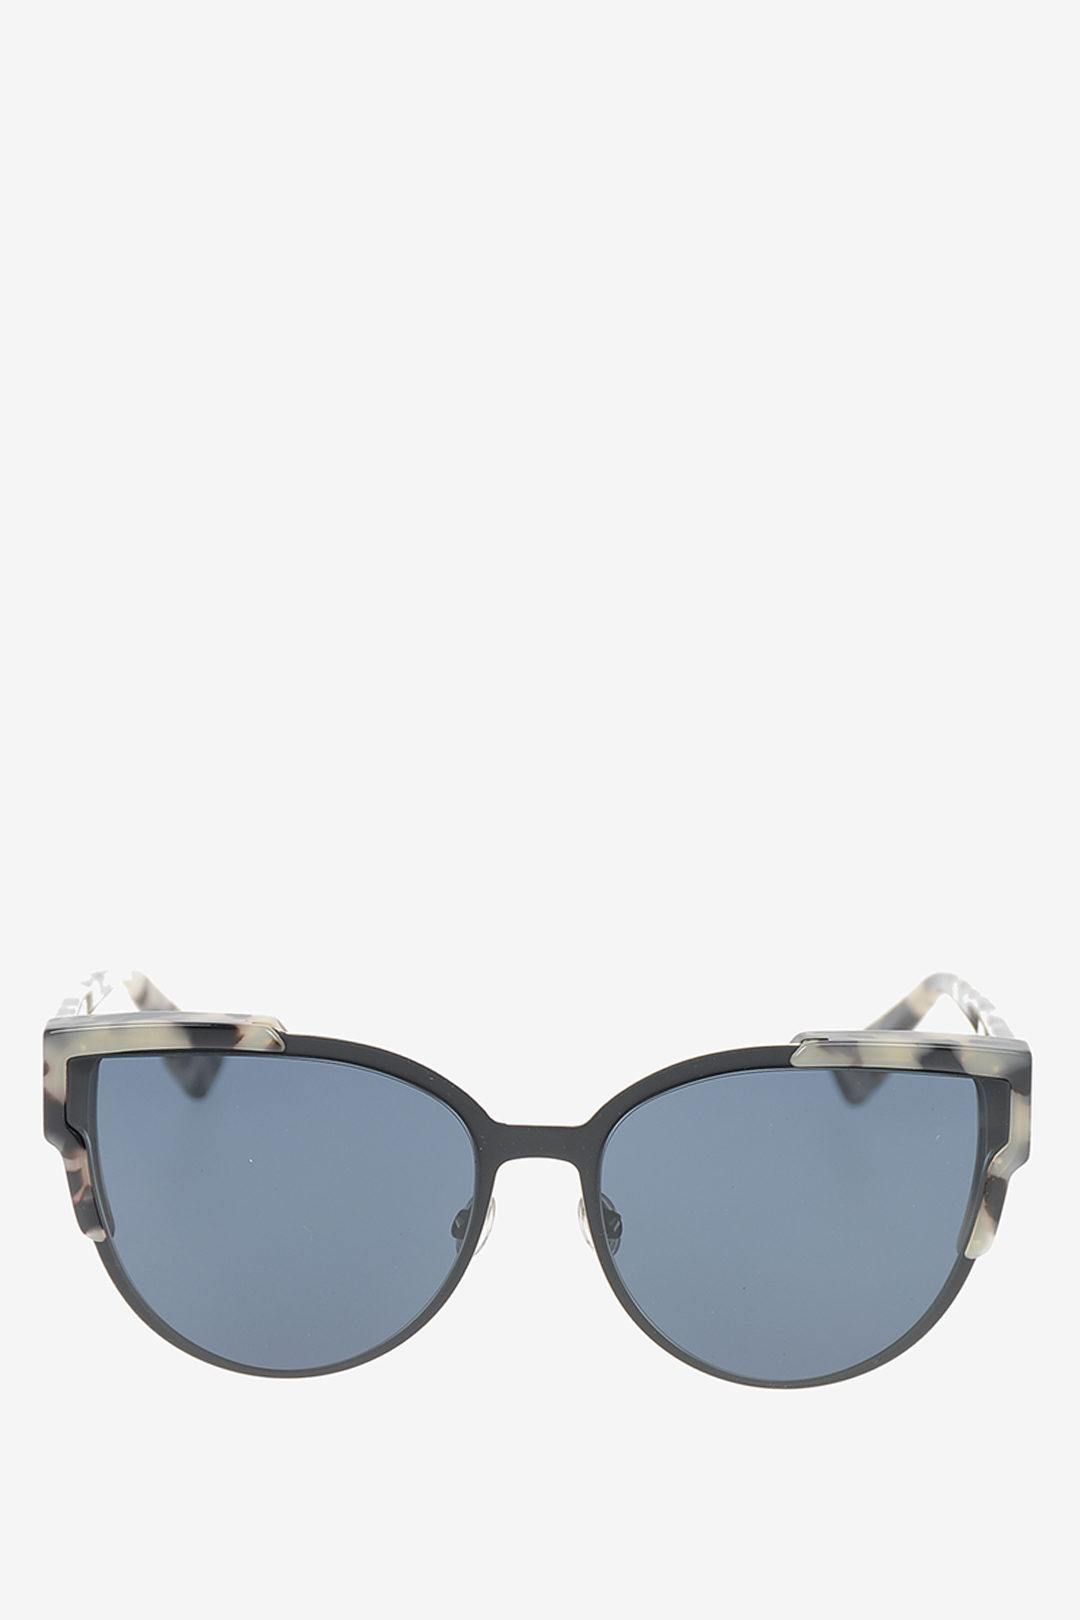 dior wildly sunglasses